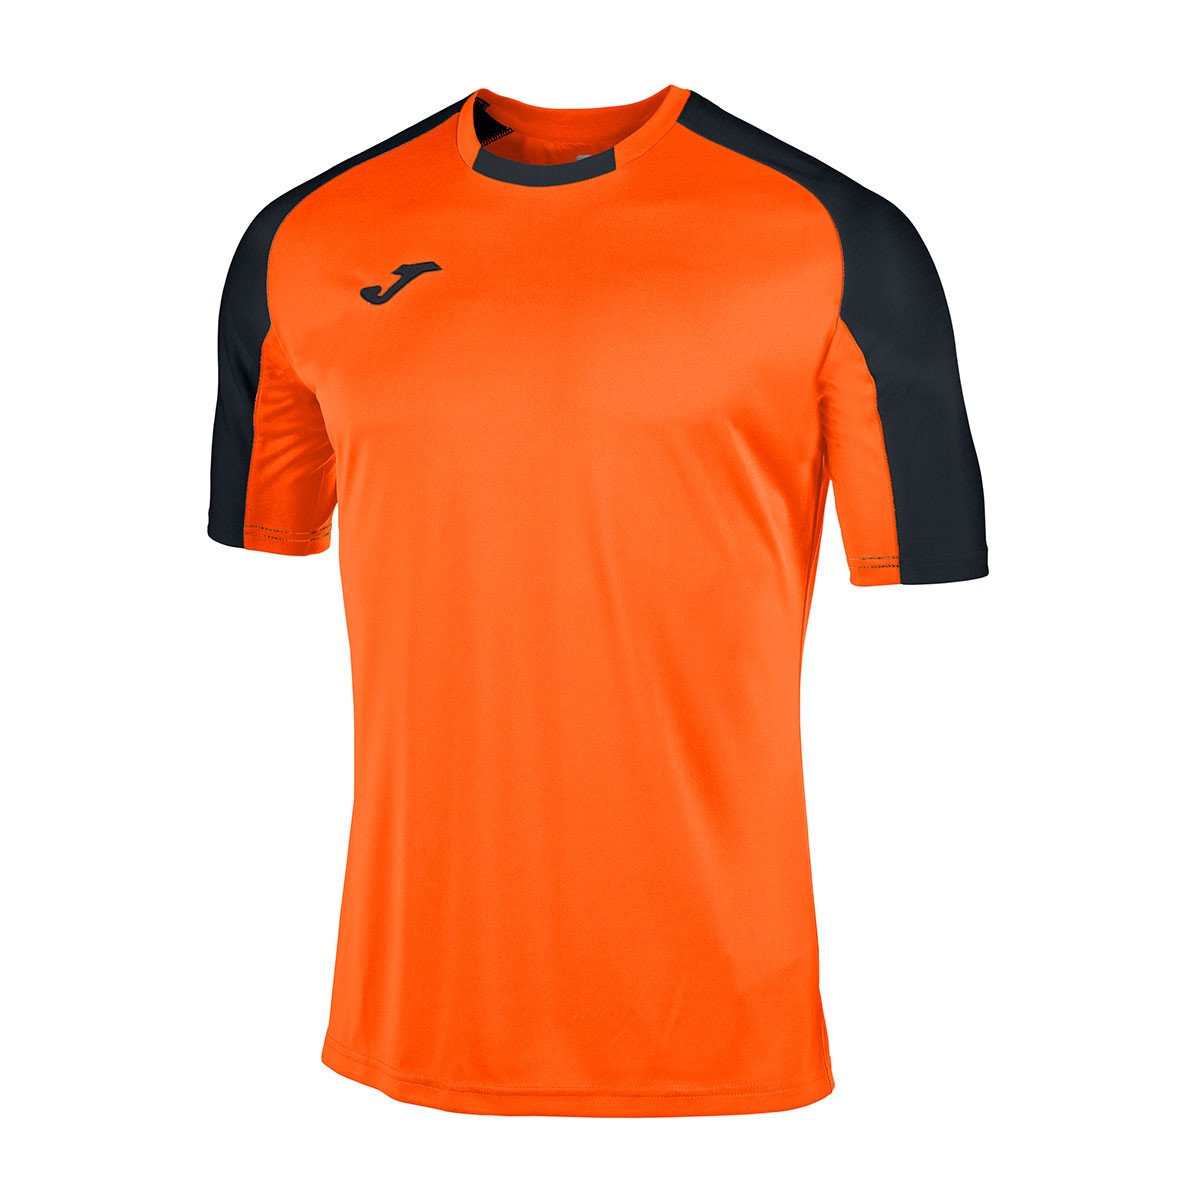 Camiseta Joma Essential m/c Naranja-Negro - Tienda de fútbol Fútbol Emotion